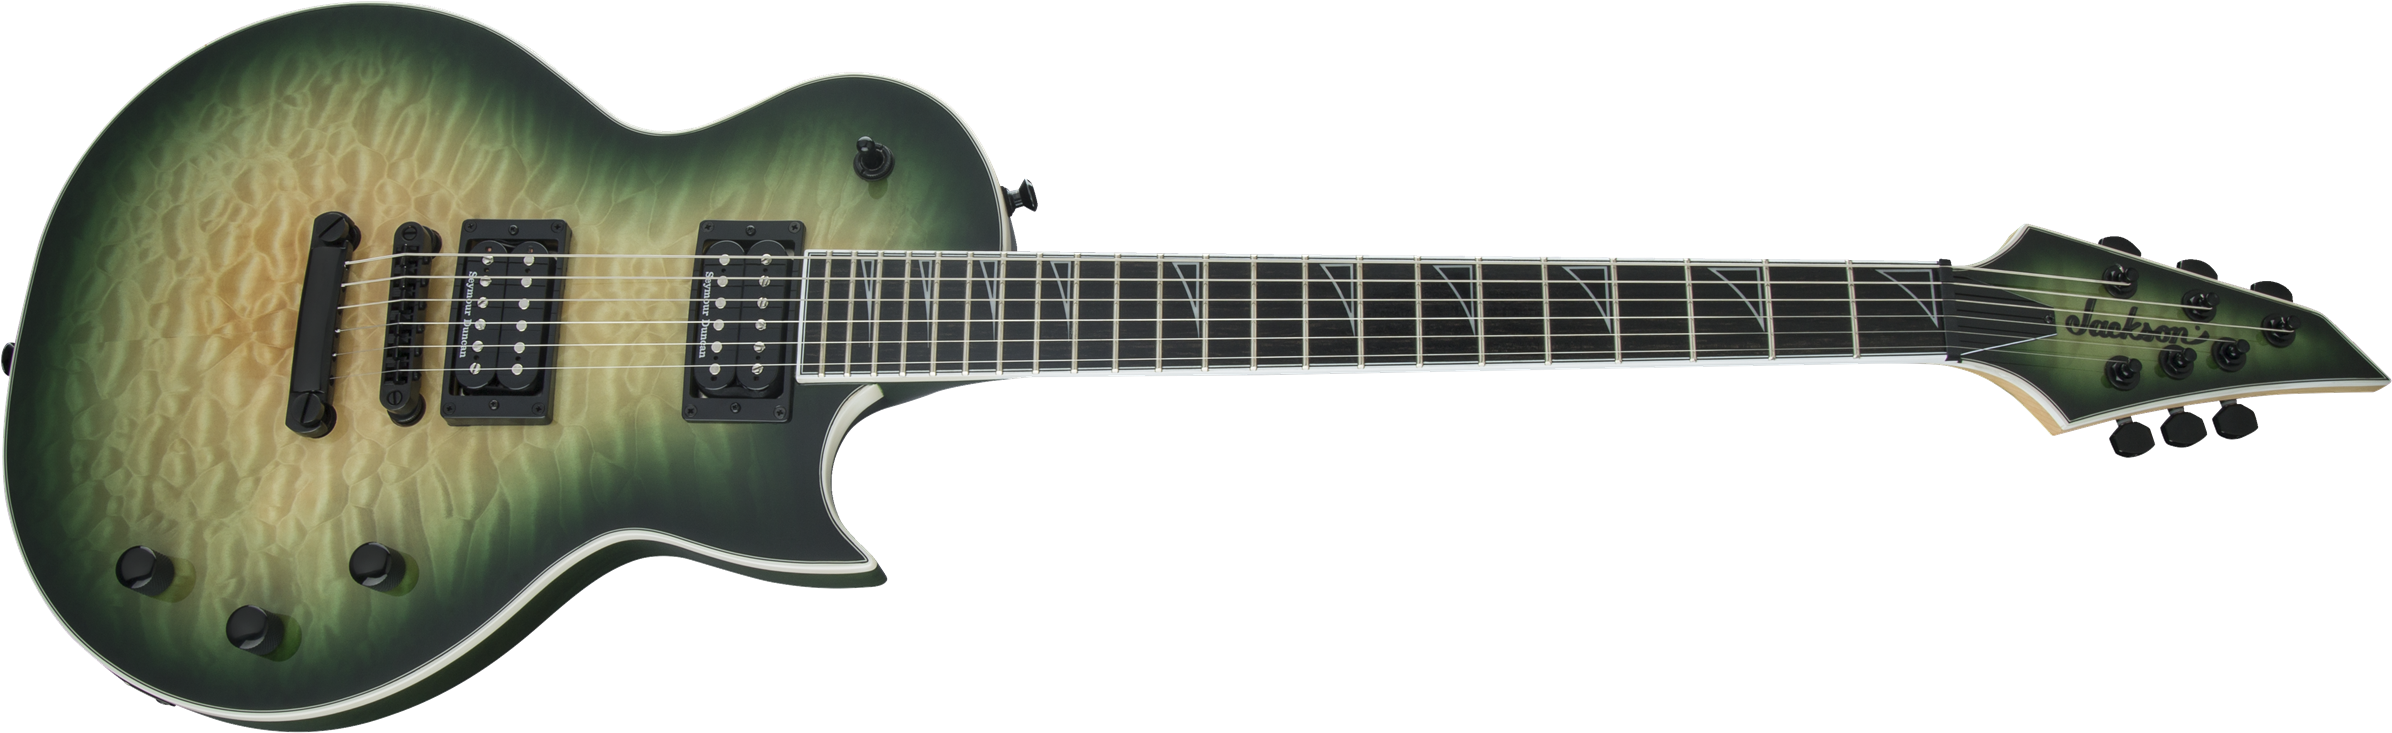 Green Burst Electric Guitar PNG image